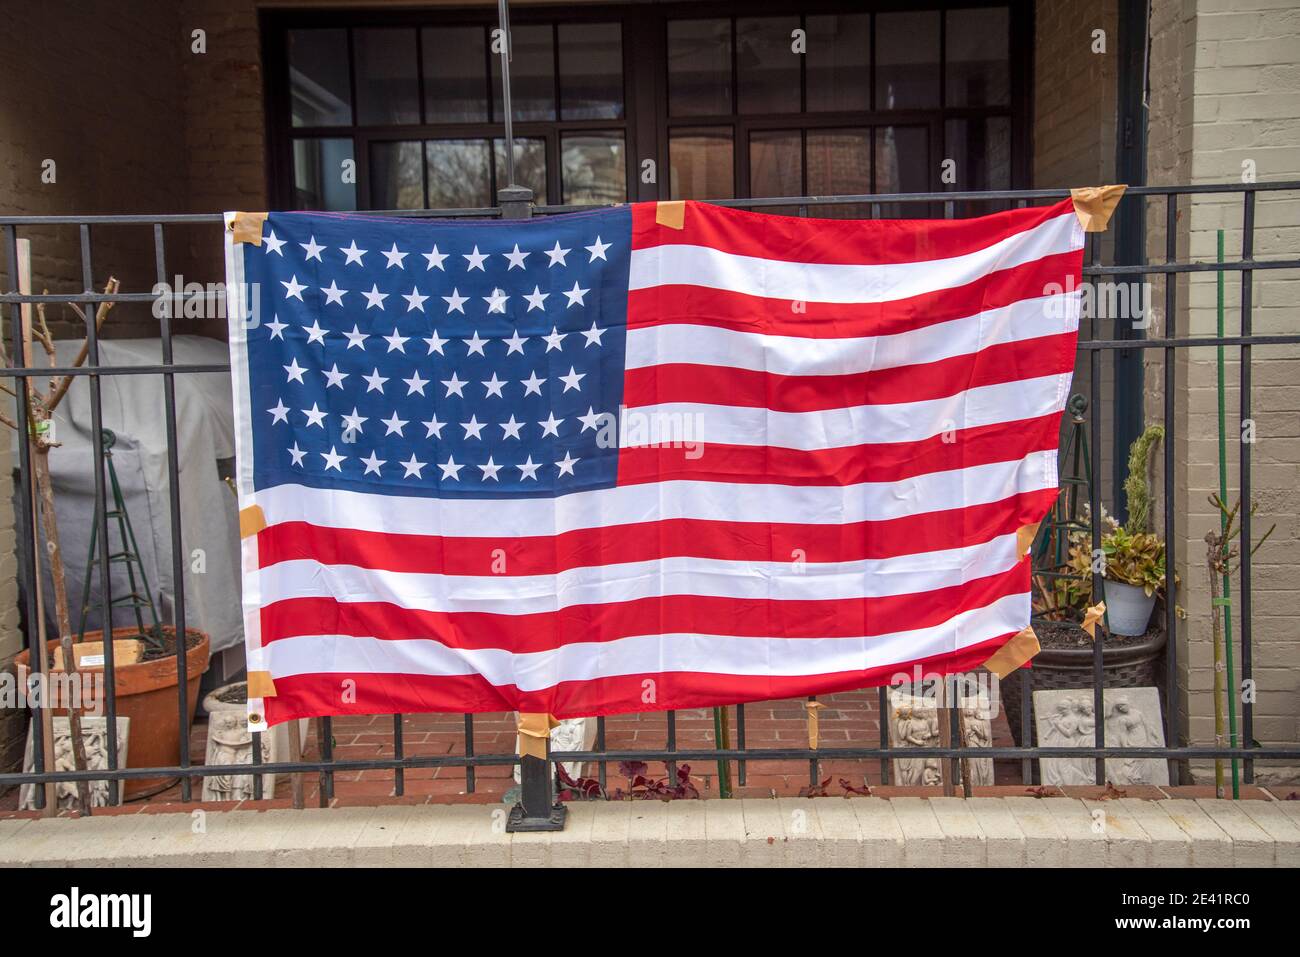 A U.S. flag, taped to a balcony railing celebrates the Inauguration of President Joe Biden, January 19, 2021. Stock Photo